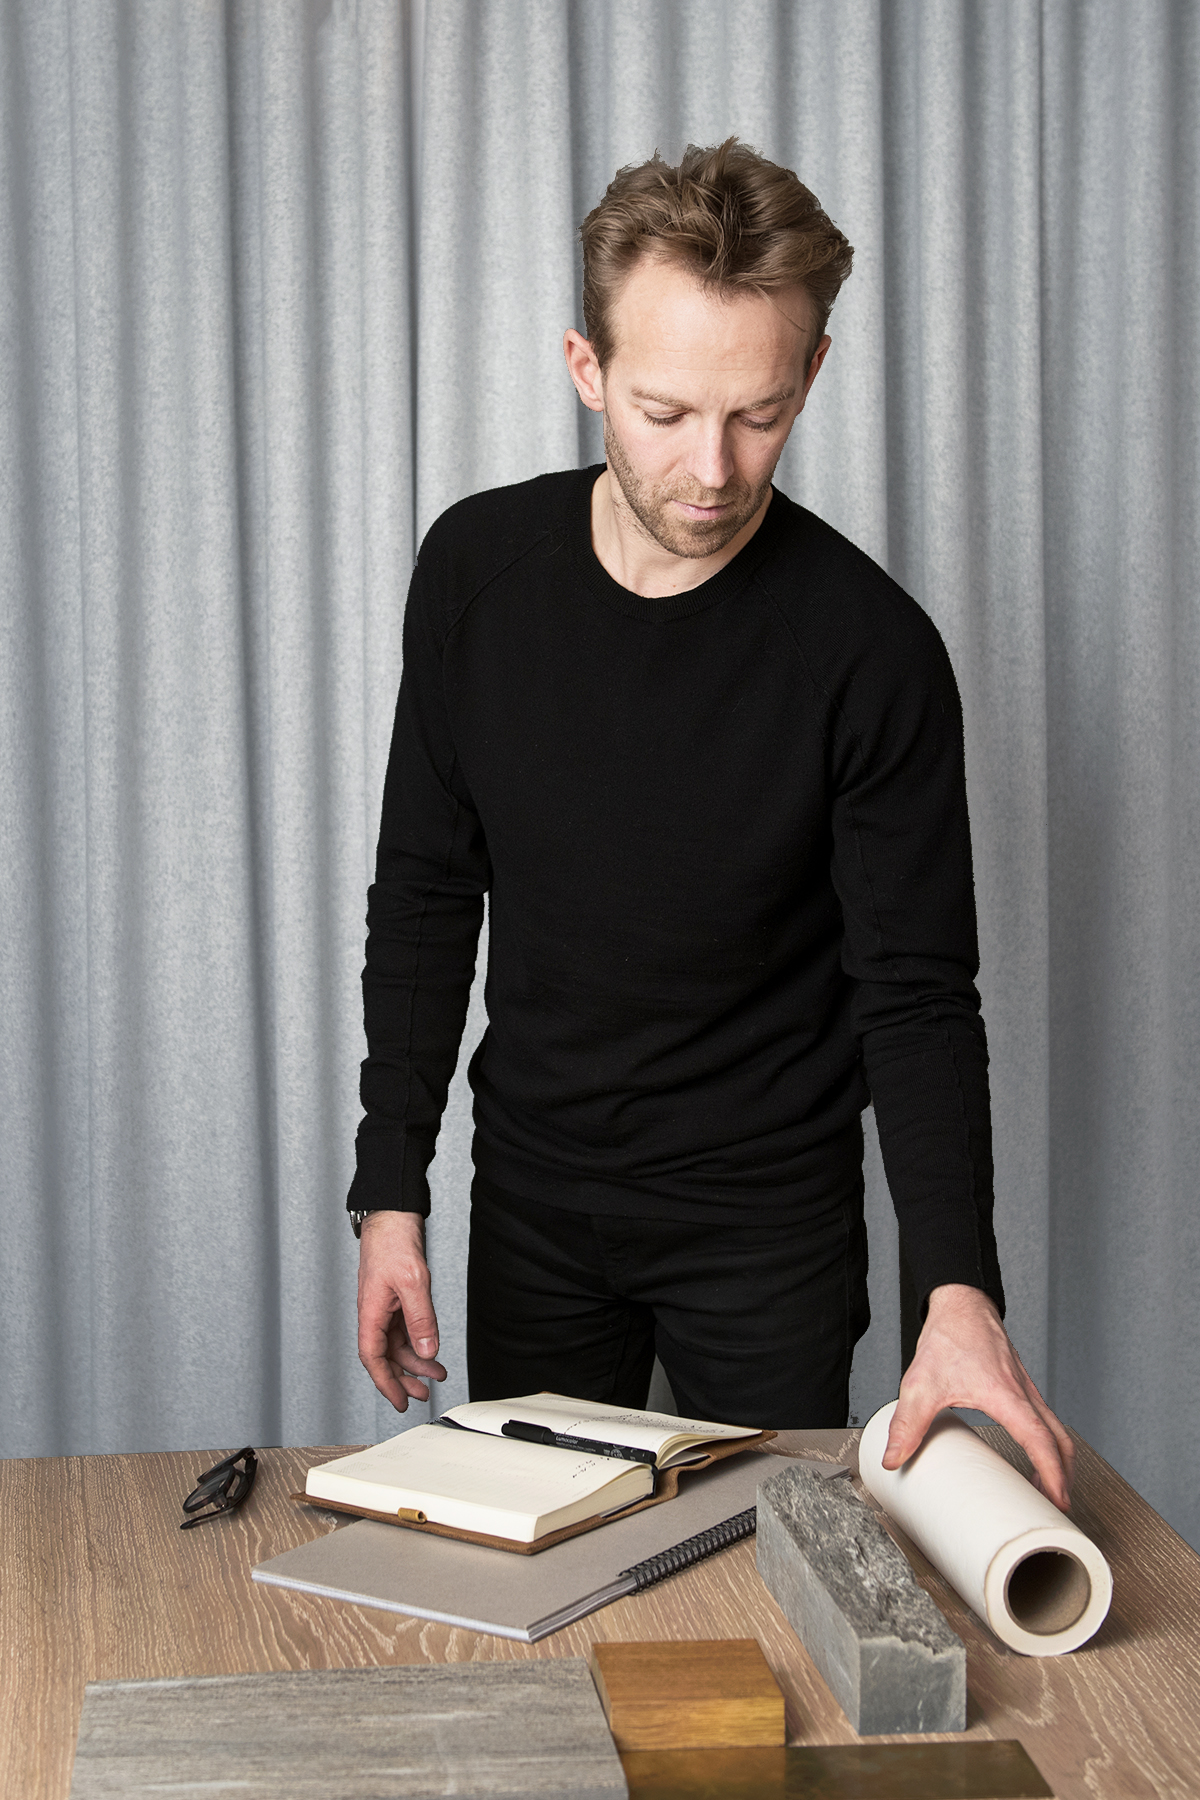 Rasmus Bak Arkitekt og founder af Baks Arkitekter